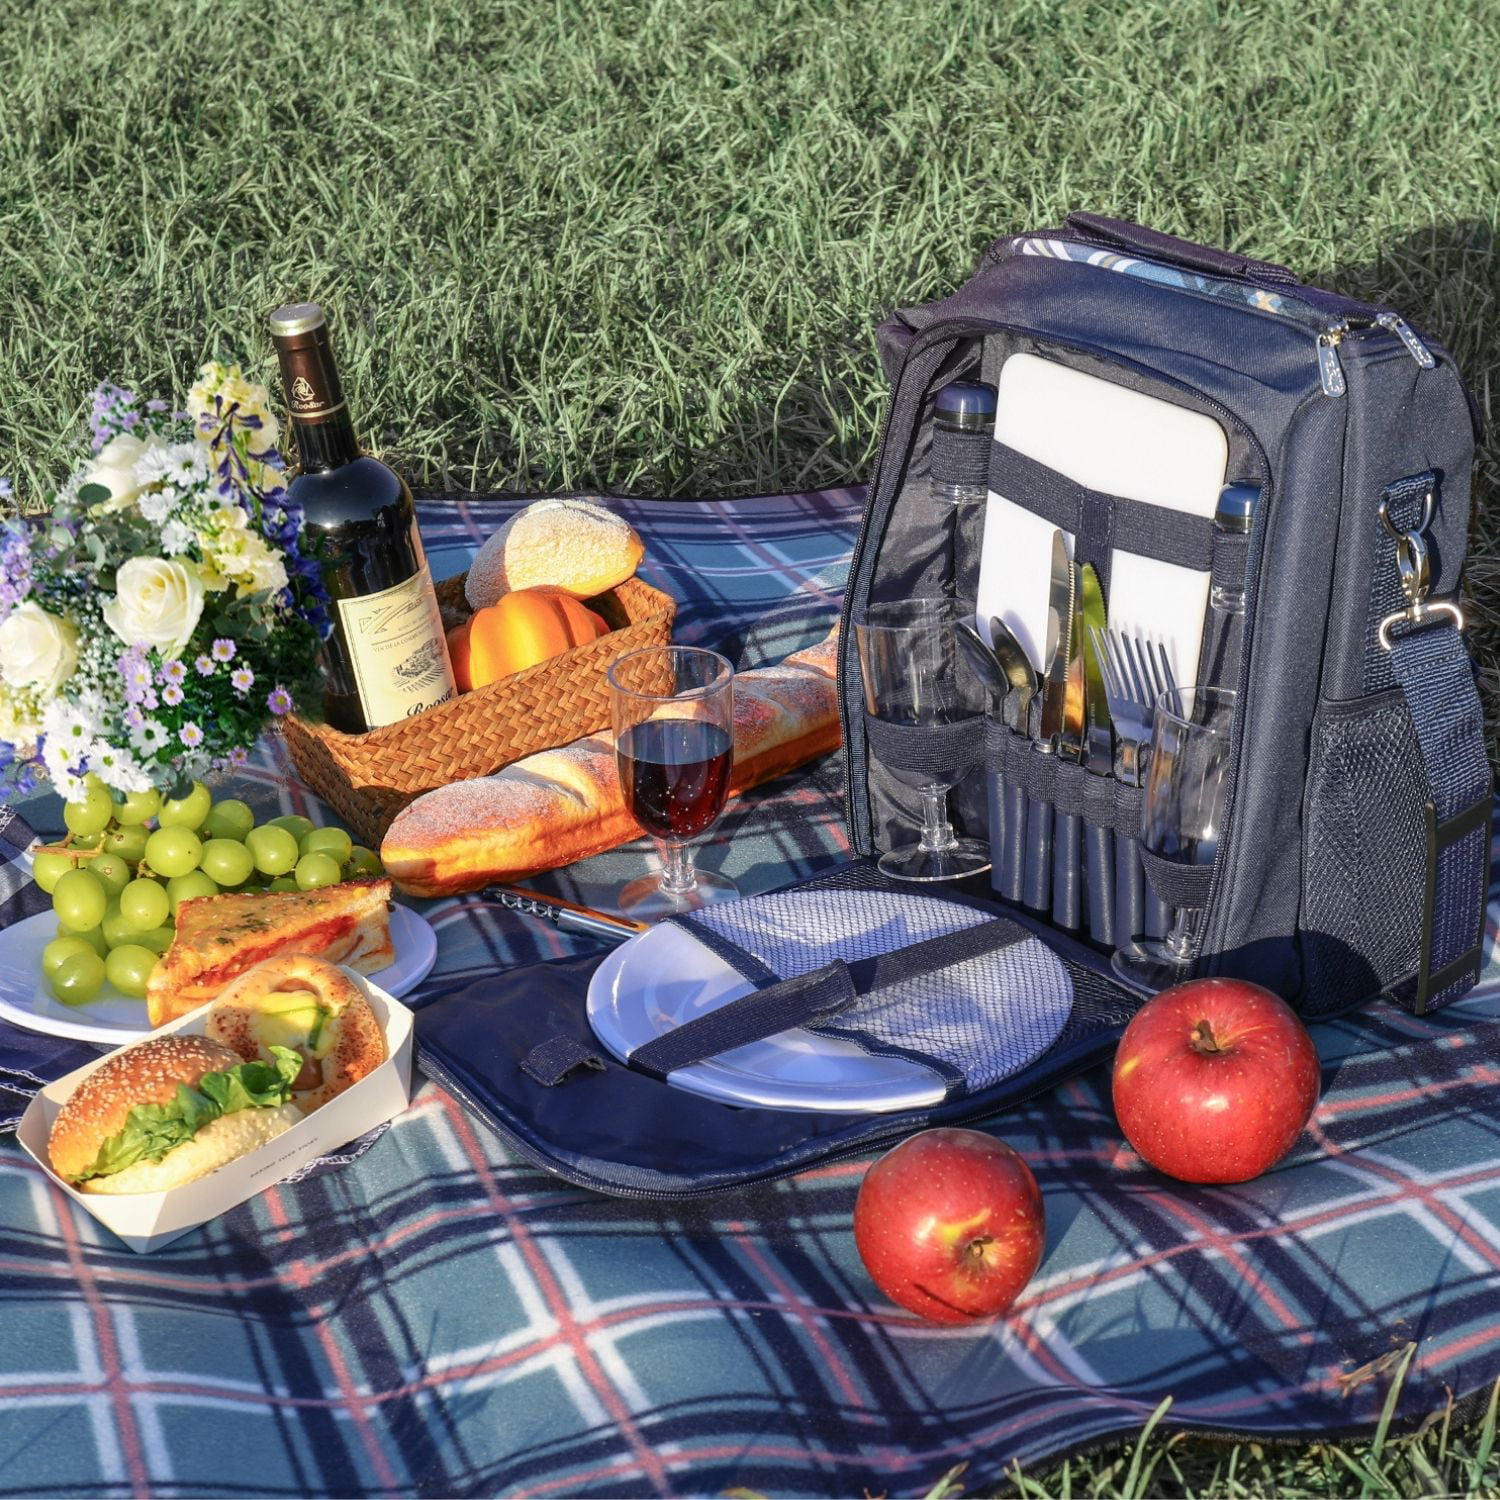 Plush Picnic - 2 Person Picnic Backpack / Picnic Basket with Cooler Compartment, Detachable Bottle/Wine Holder, Fleece